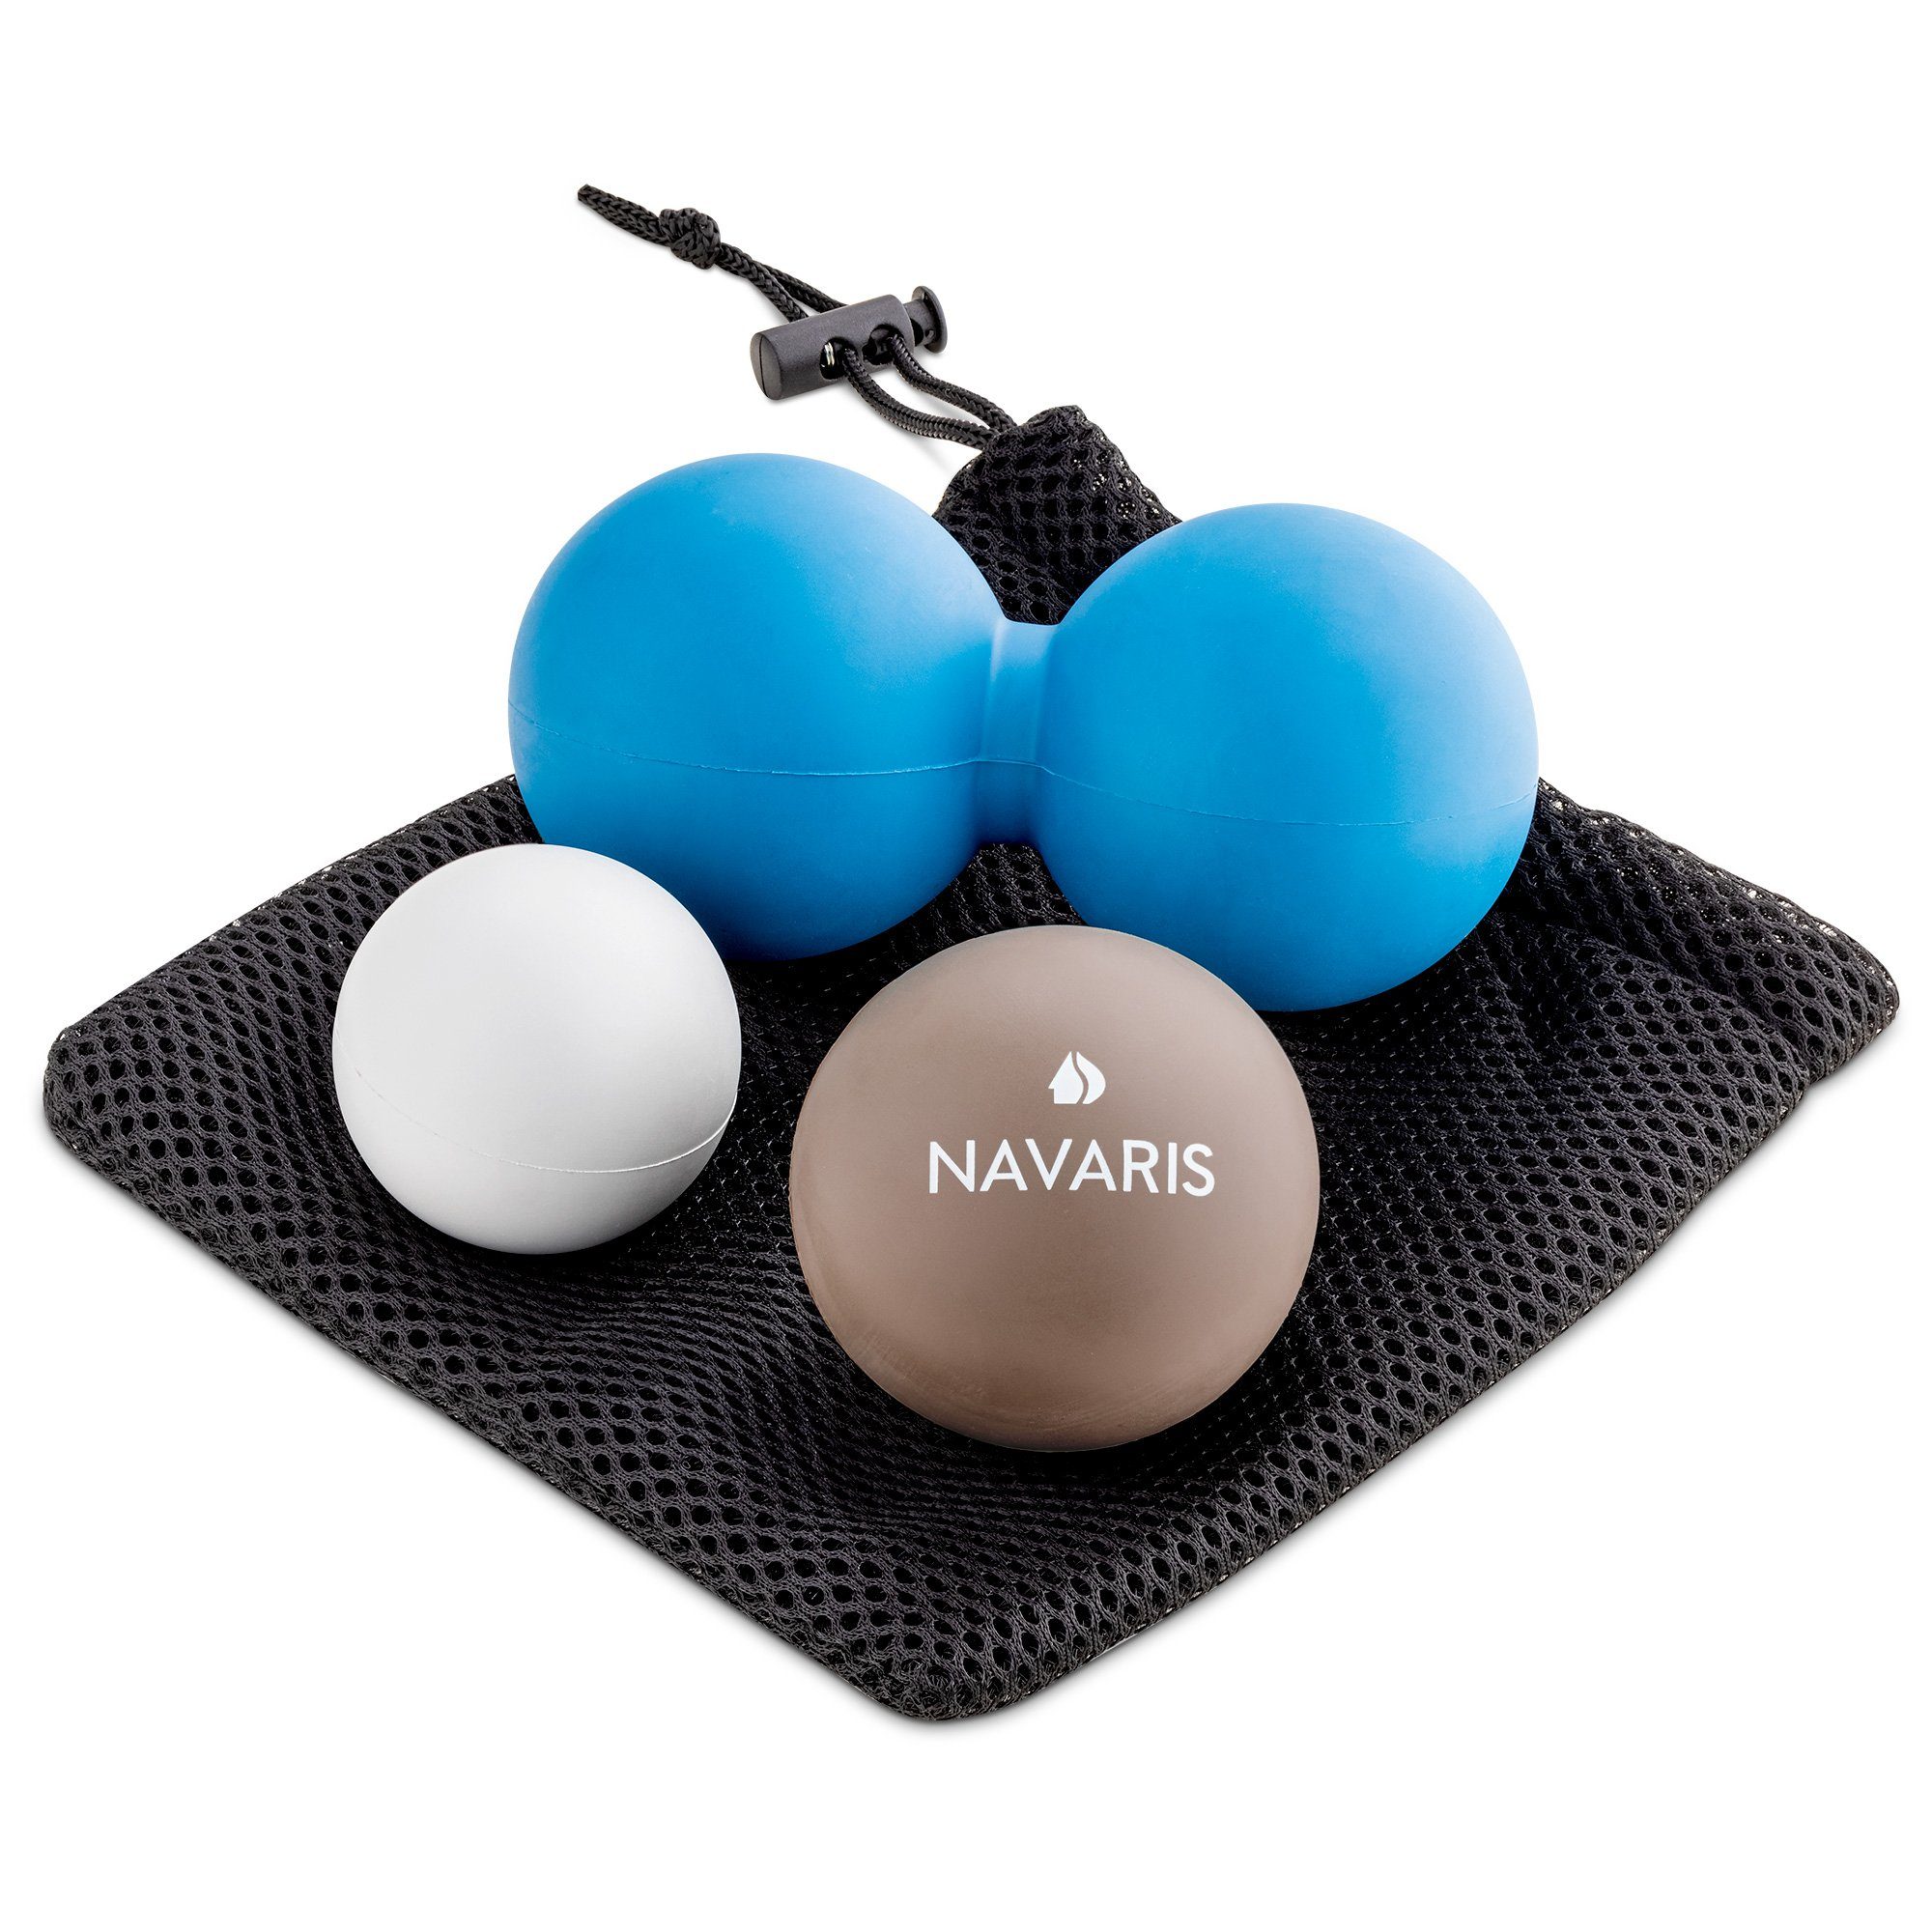 Navaris Massageball, Set - 2x Lacrosse Ball 1x Duoball - Peanut Duo Ball  Faszienball zur Massage von Nacken Schulter Rücken - mit Beutel